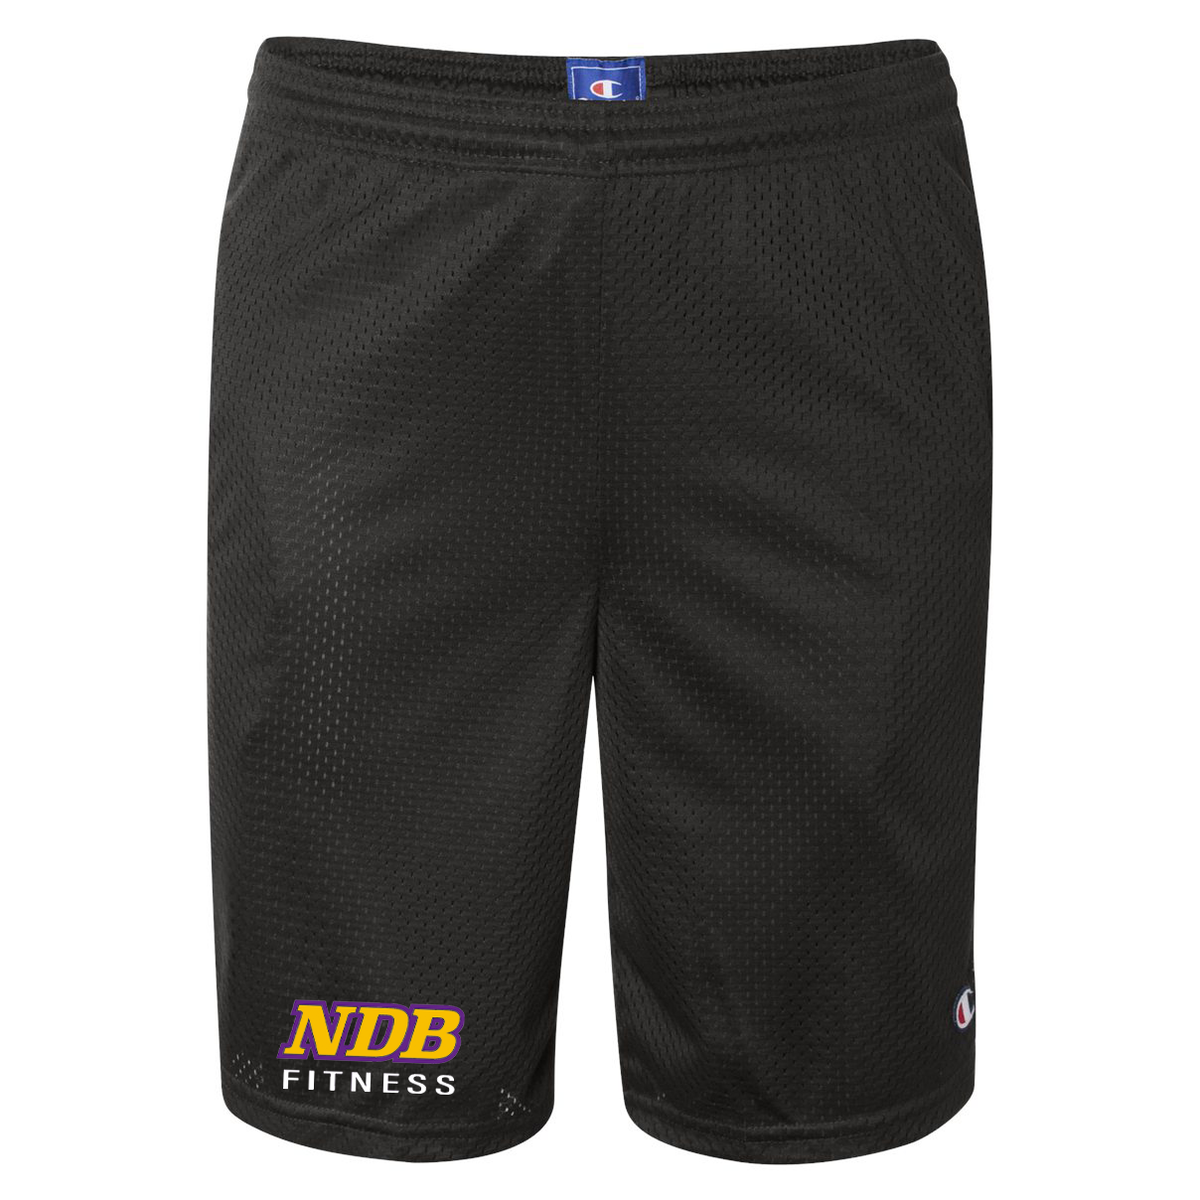 NDB Fitness Champion Mesh Shorts with Pockets